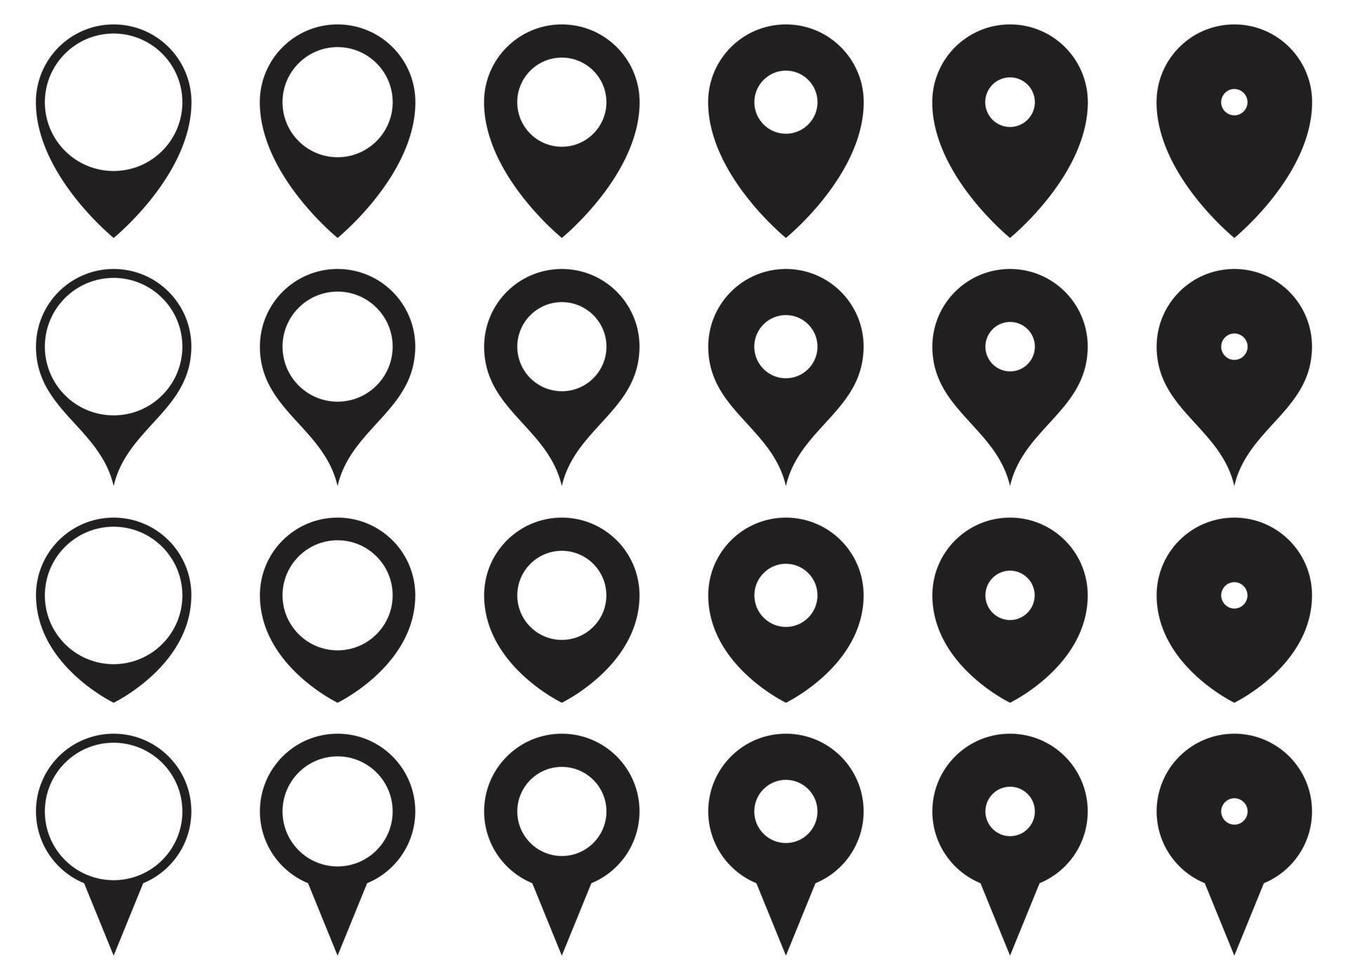 Map location pin icon set vector illustration